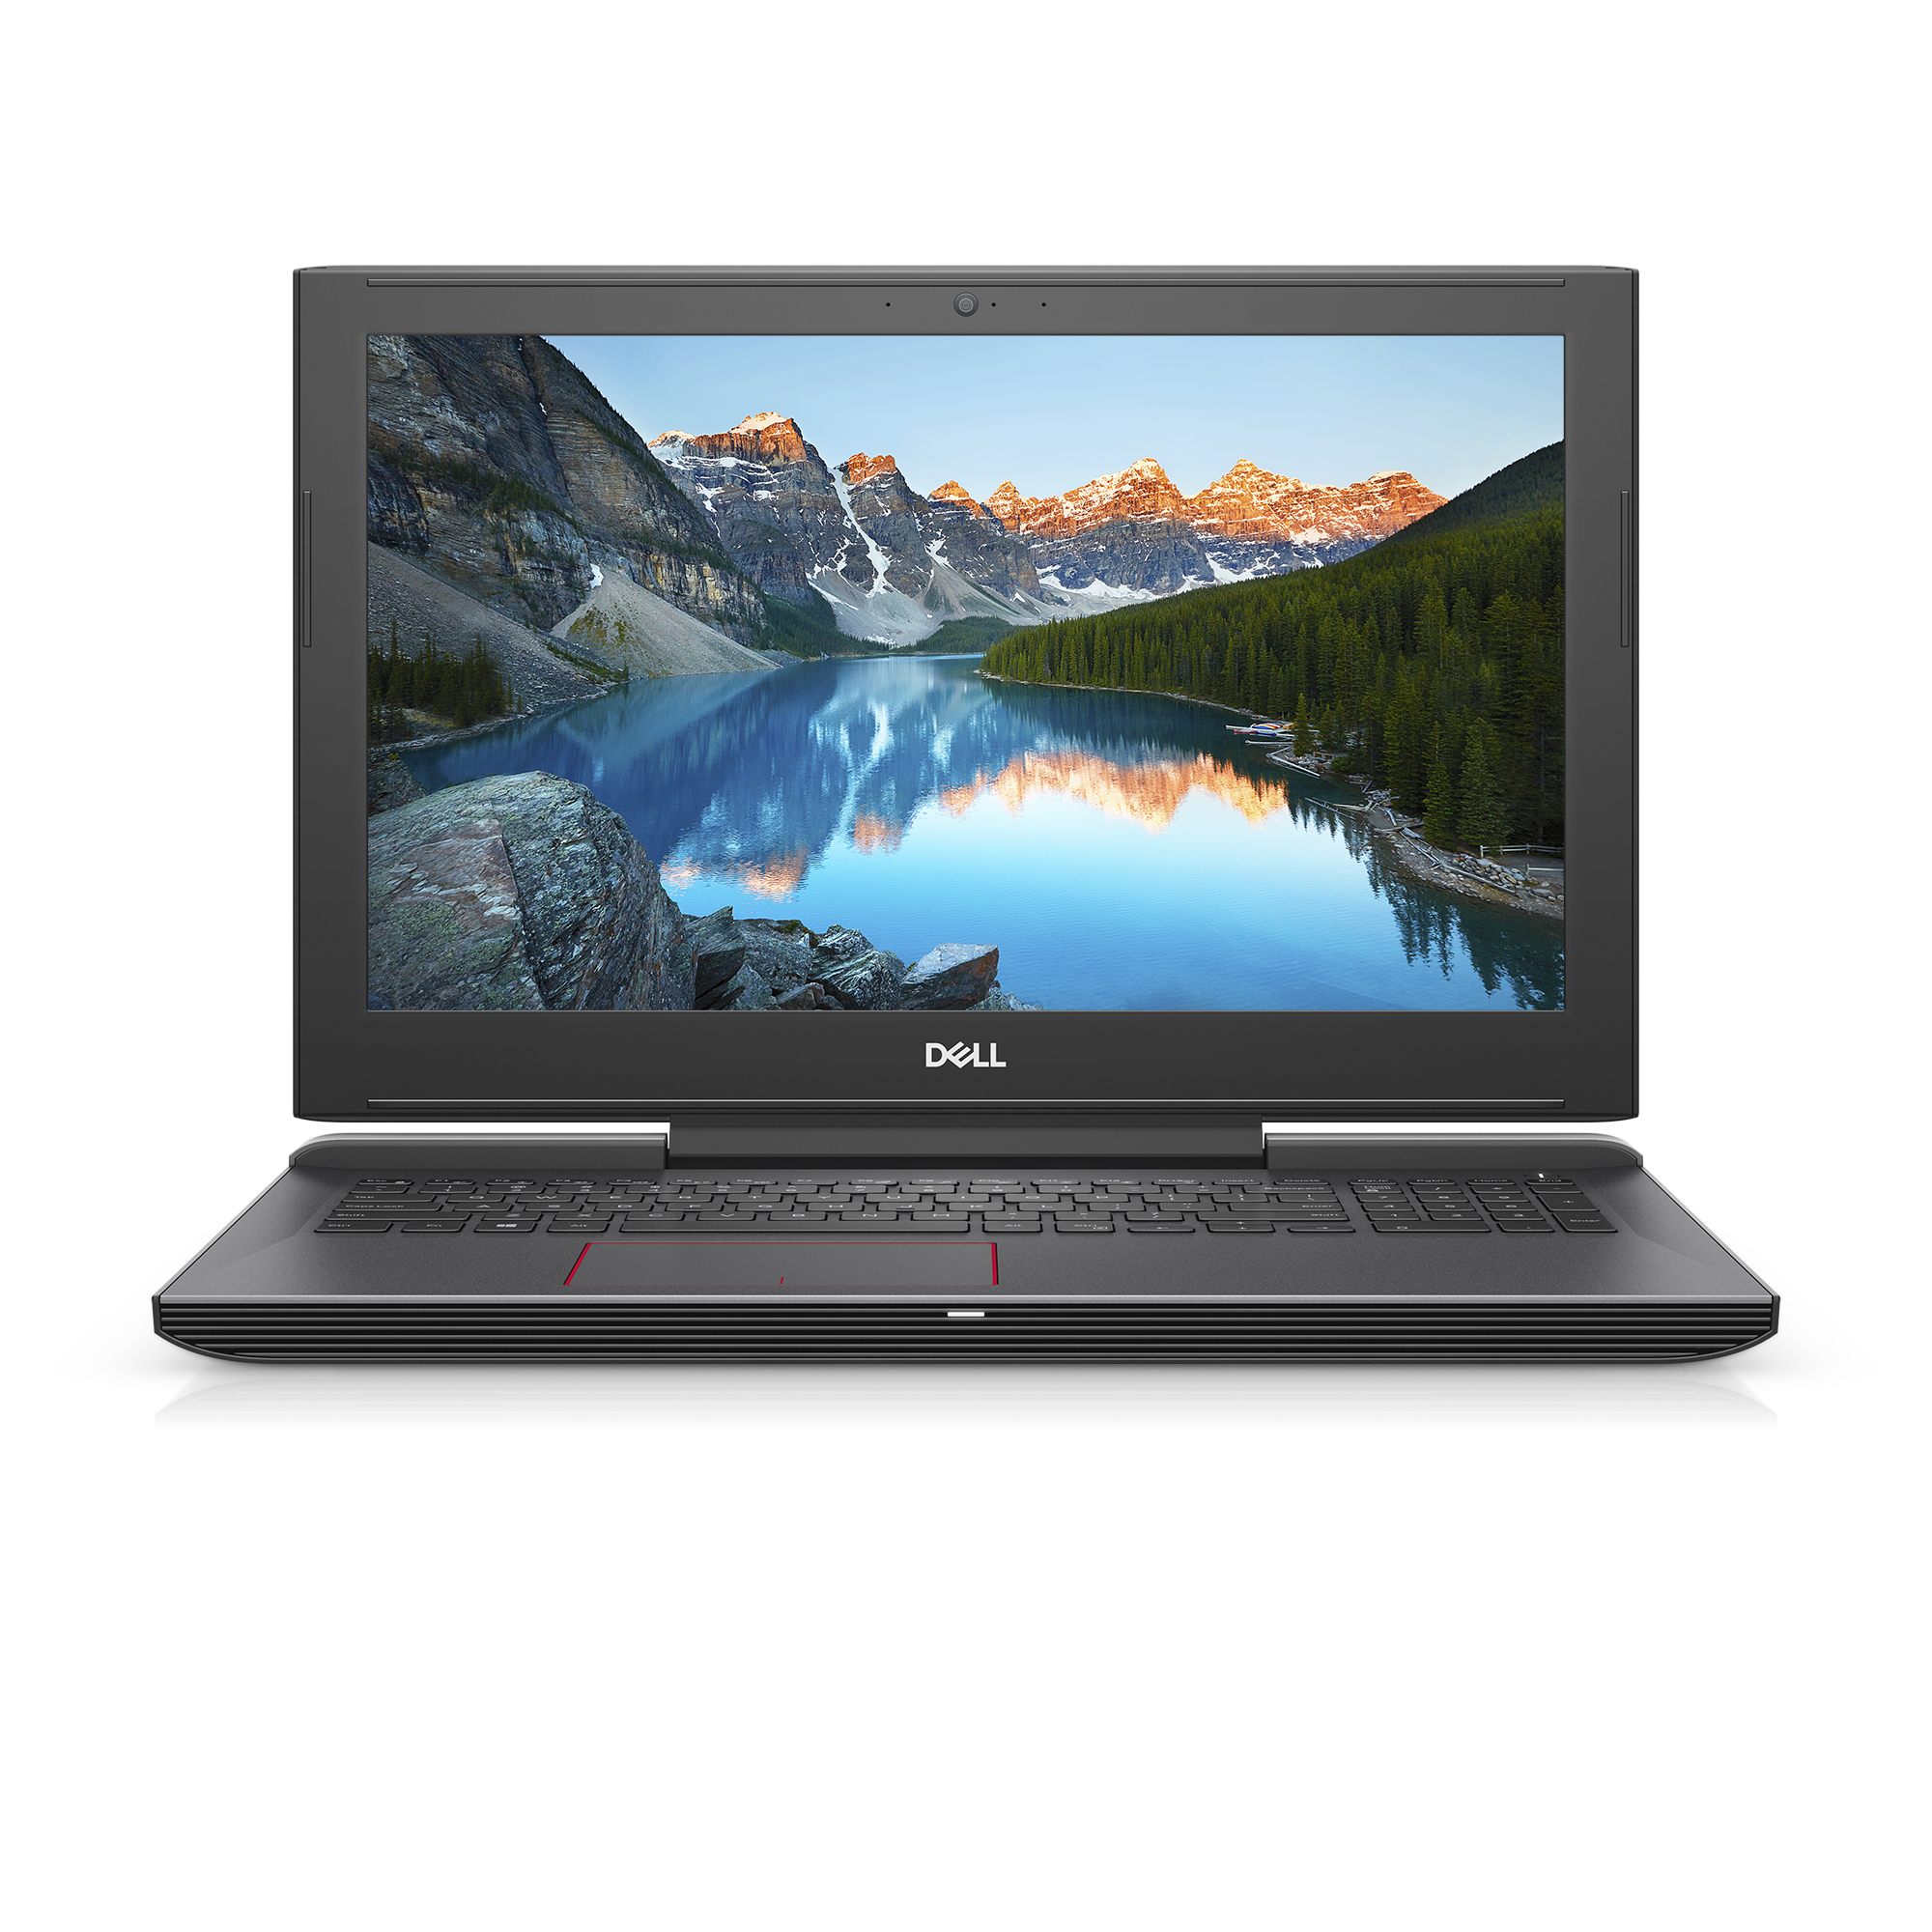 Dell G5 Gaming Laptop 15.6" Full HD, Intel Core i7-8750H, NVIDIA GeForce GTX 1050 Ti 4GB, 1TB HDD + 128GB SSD Storage, 16GB RAM, G5587-7835BLK-PUS - image 4 of 9